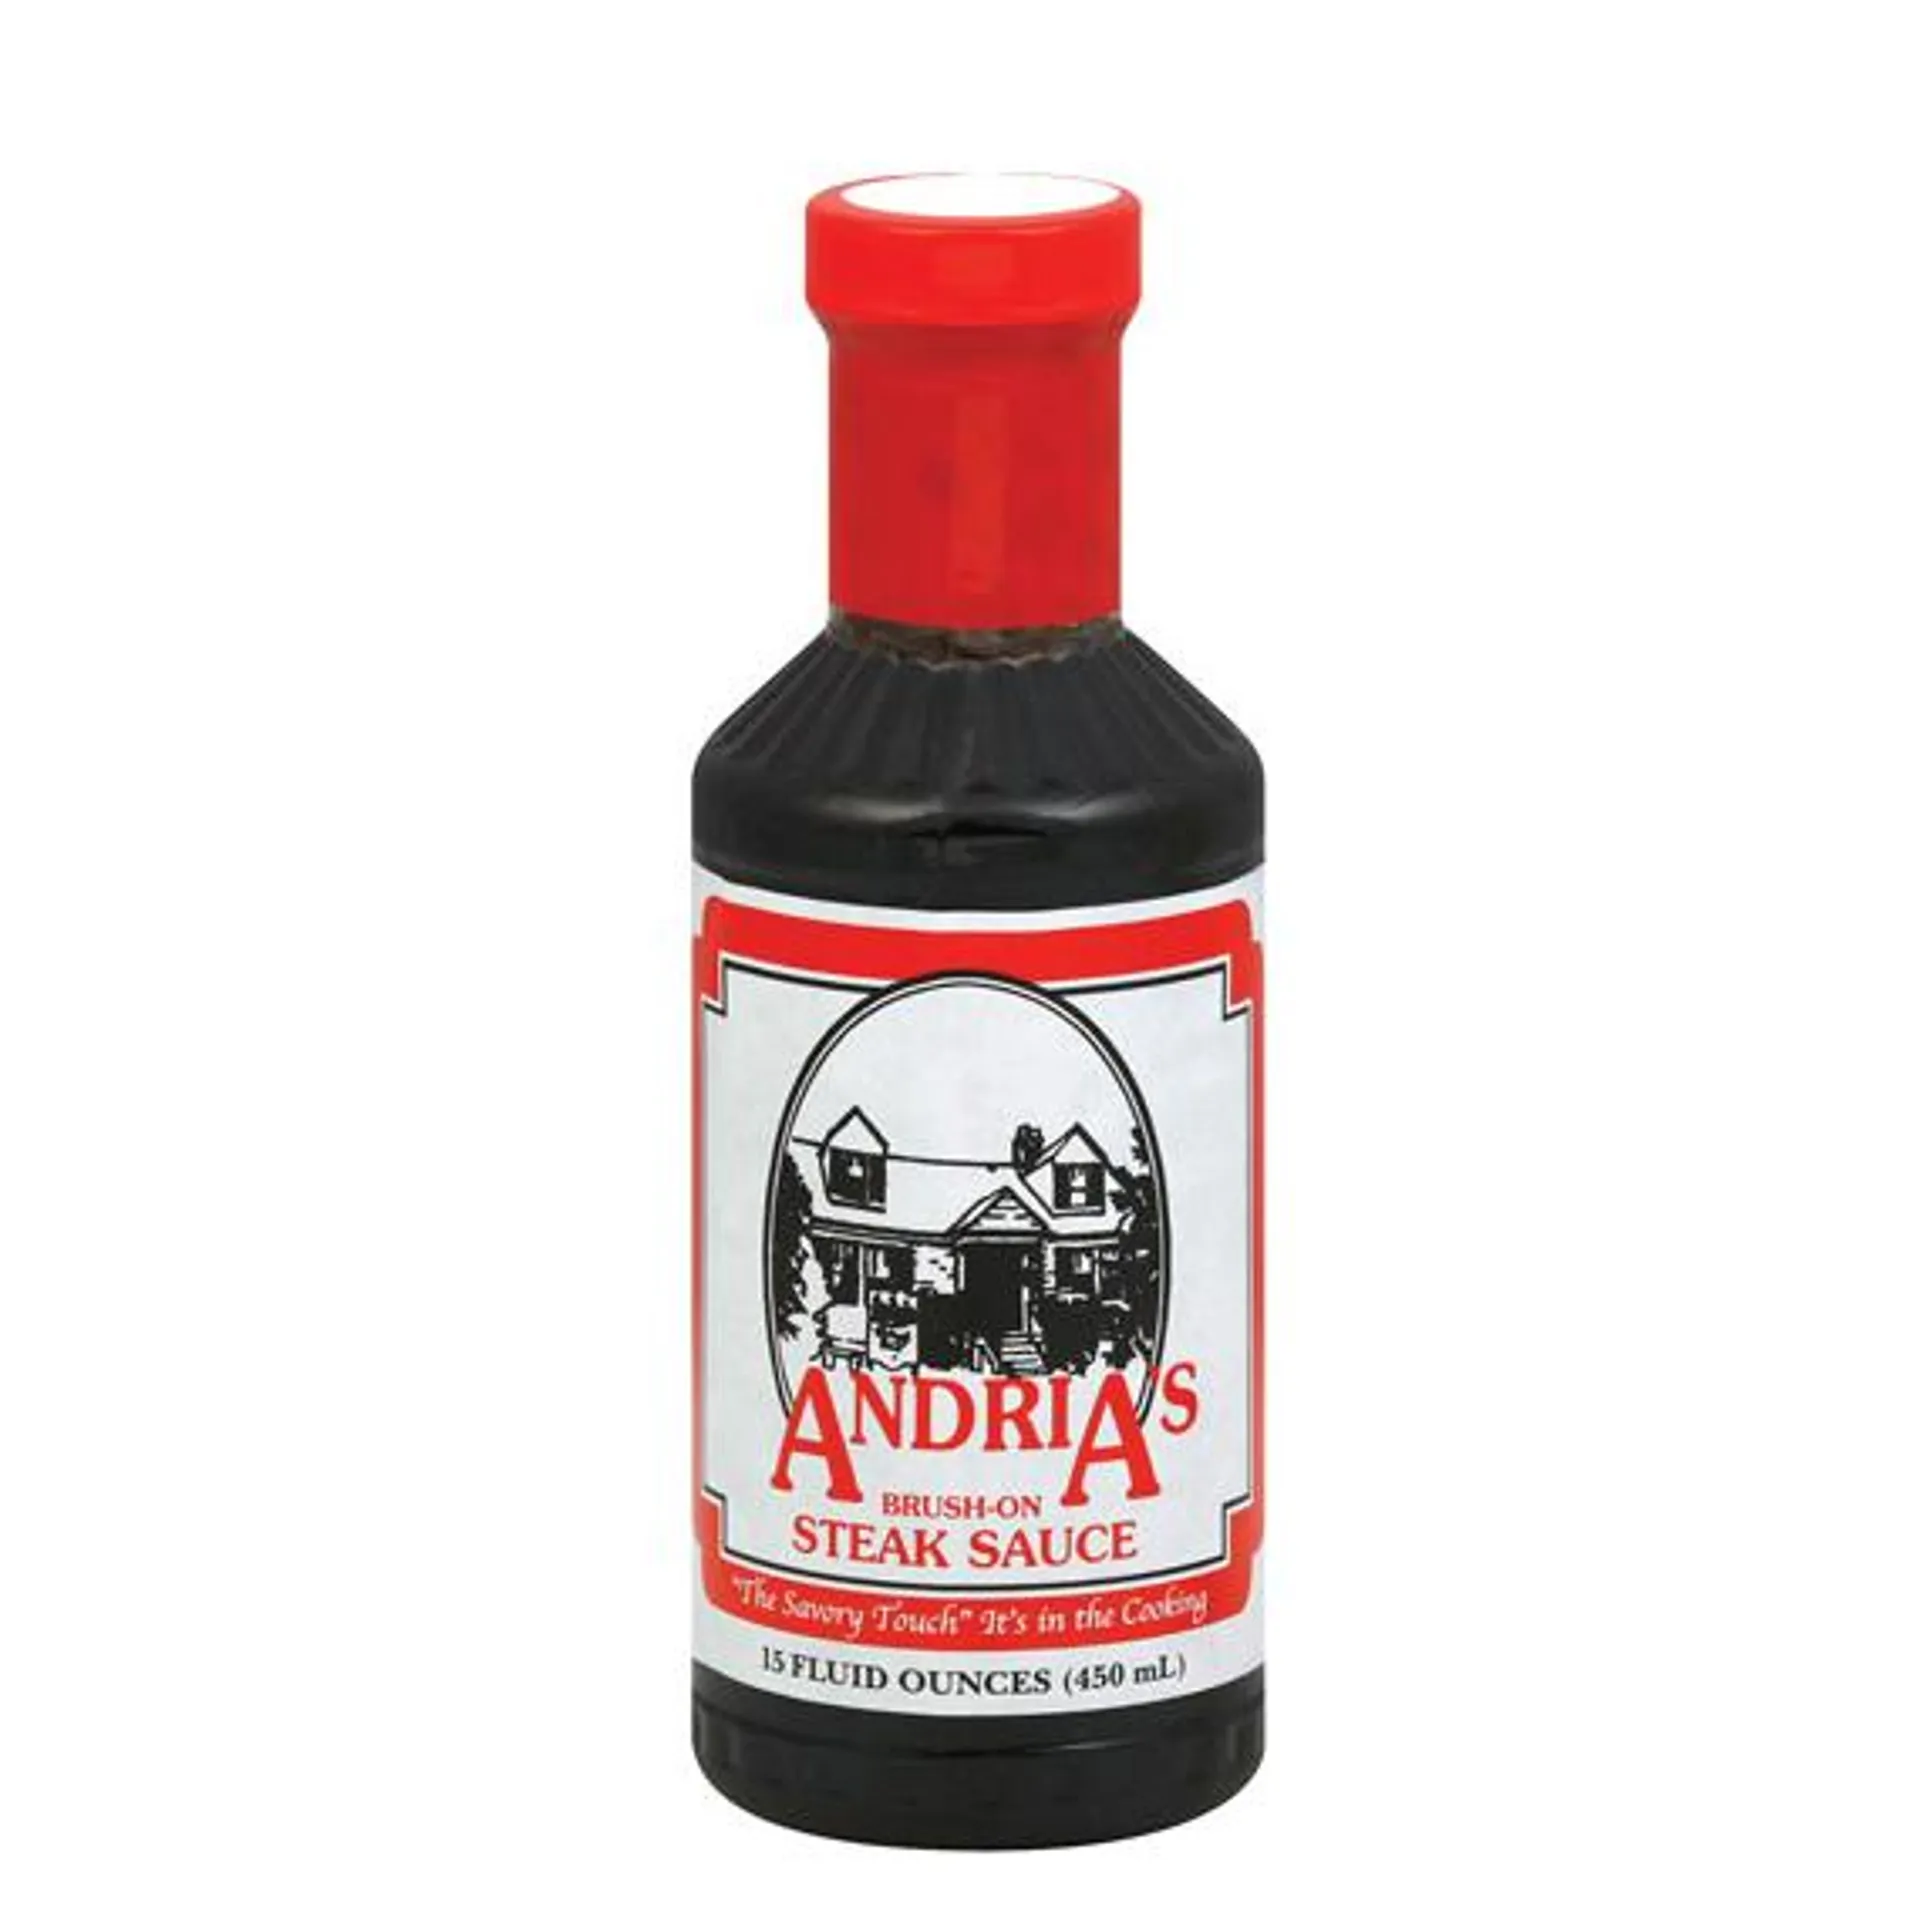 Andria's Steak Sauce